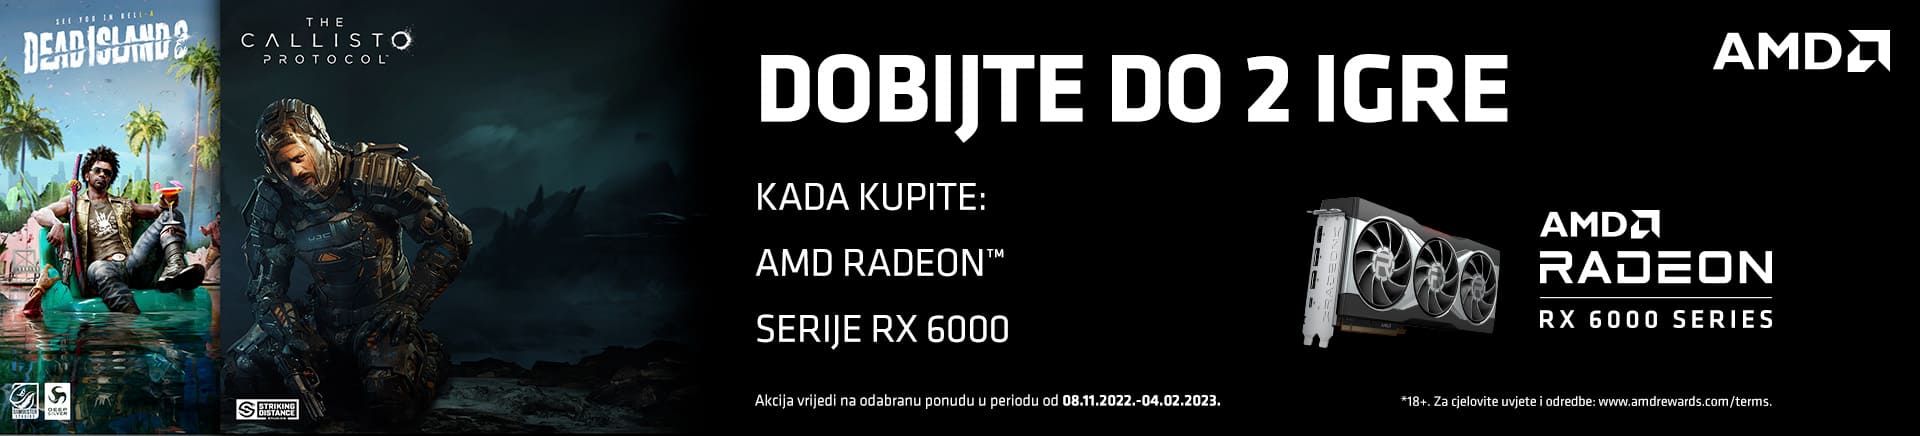 AMD Radeon - Raise the game bundle